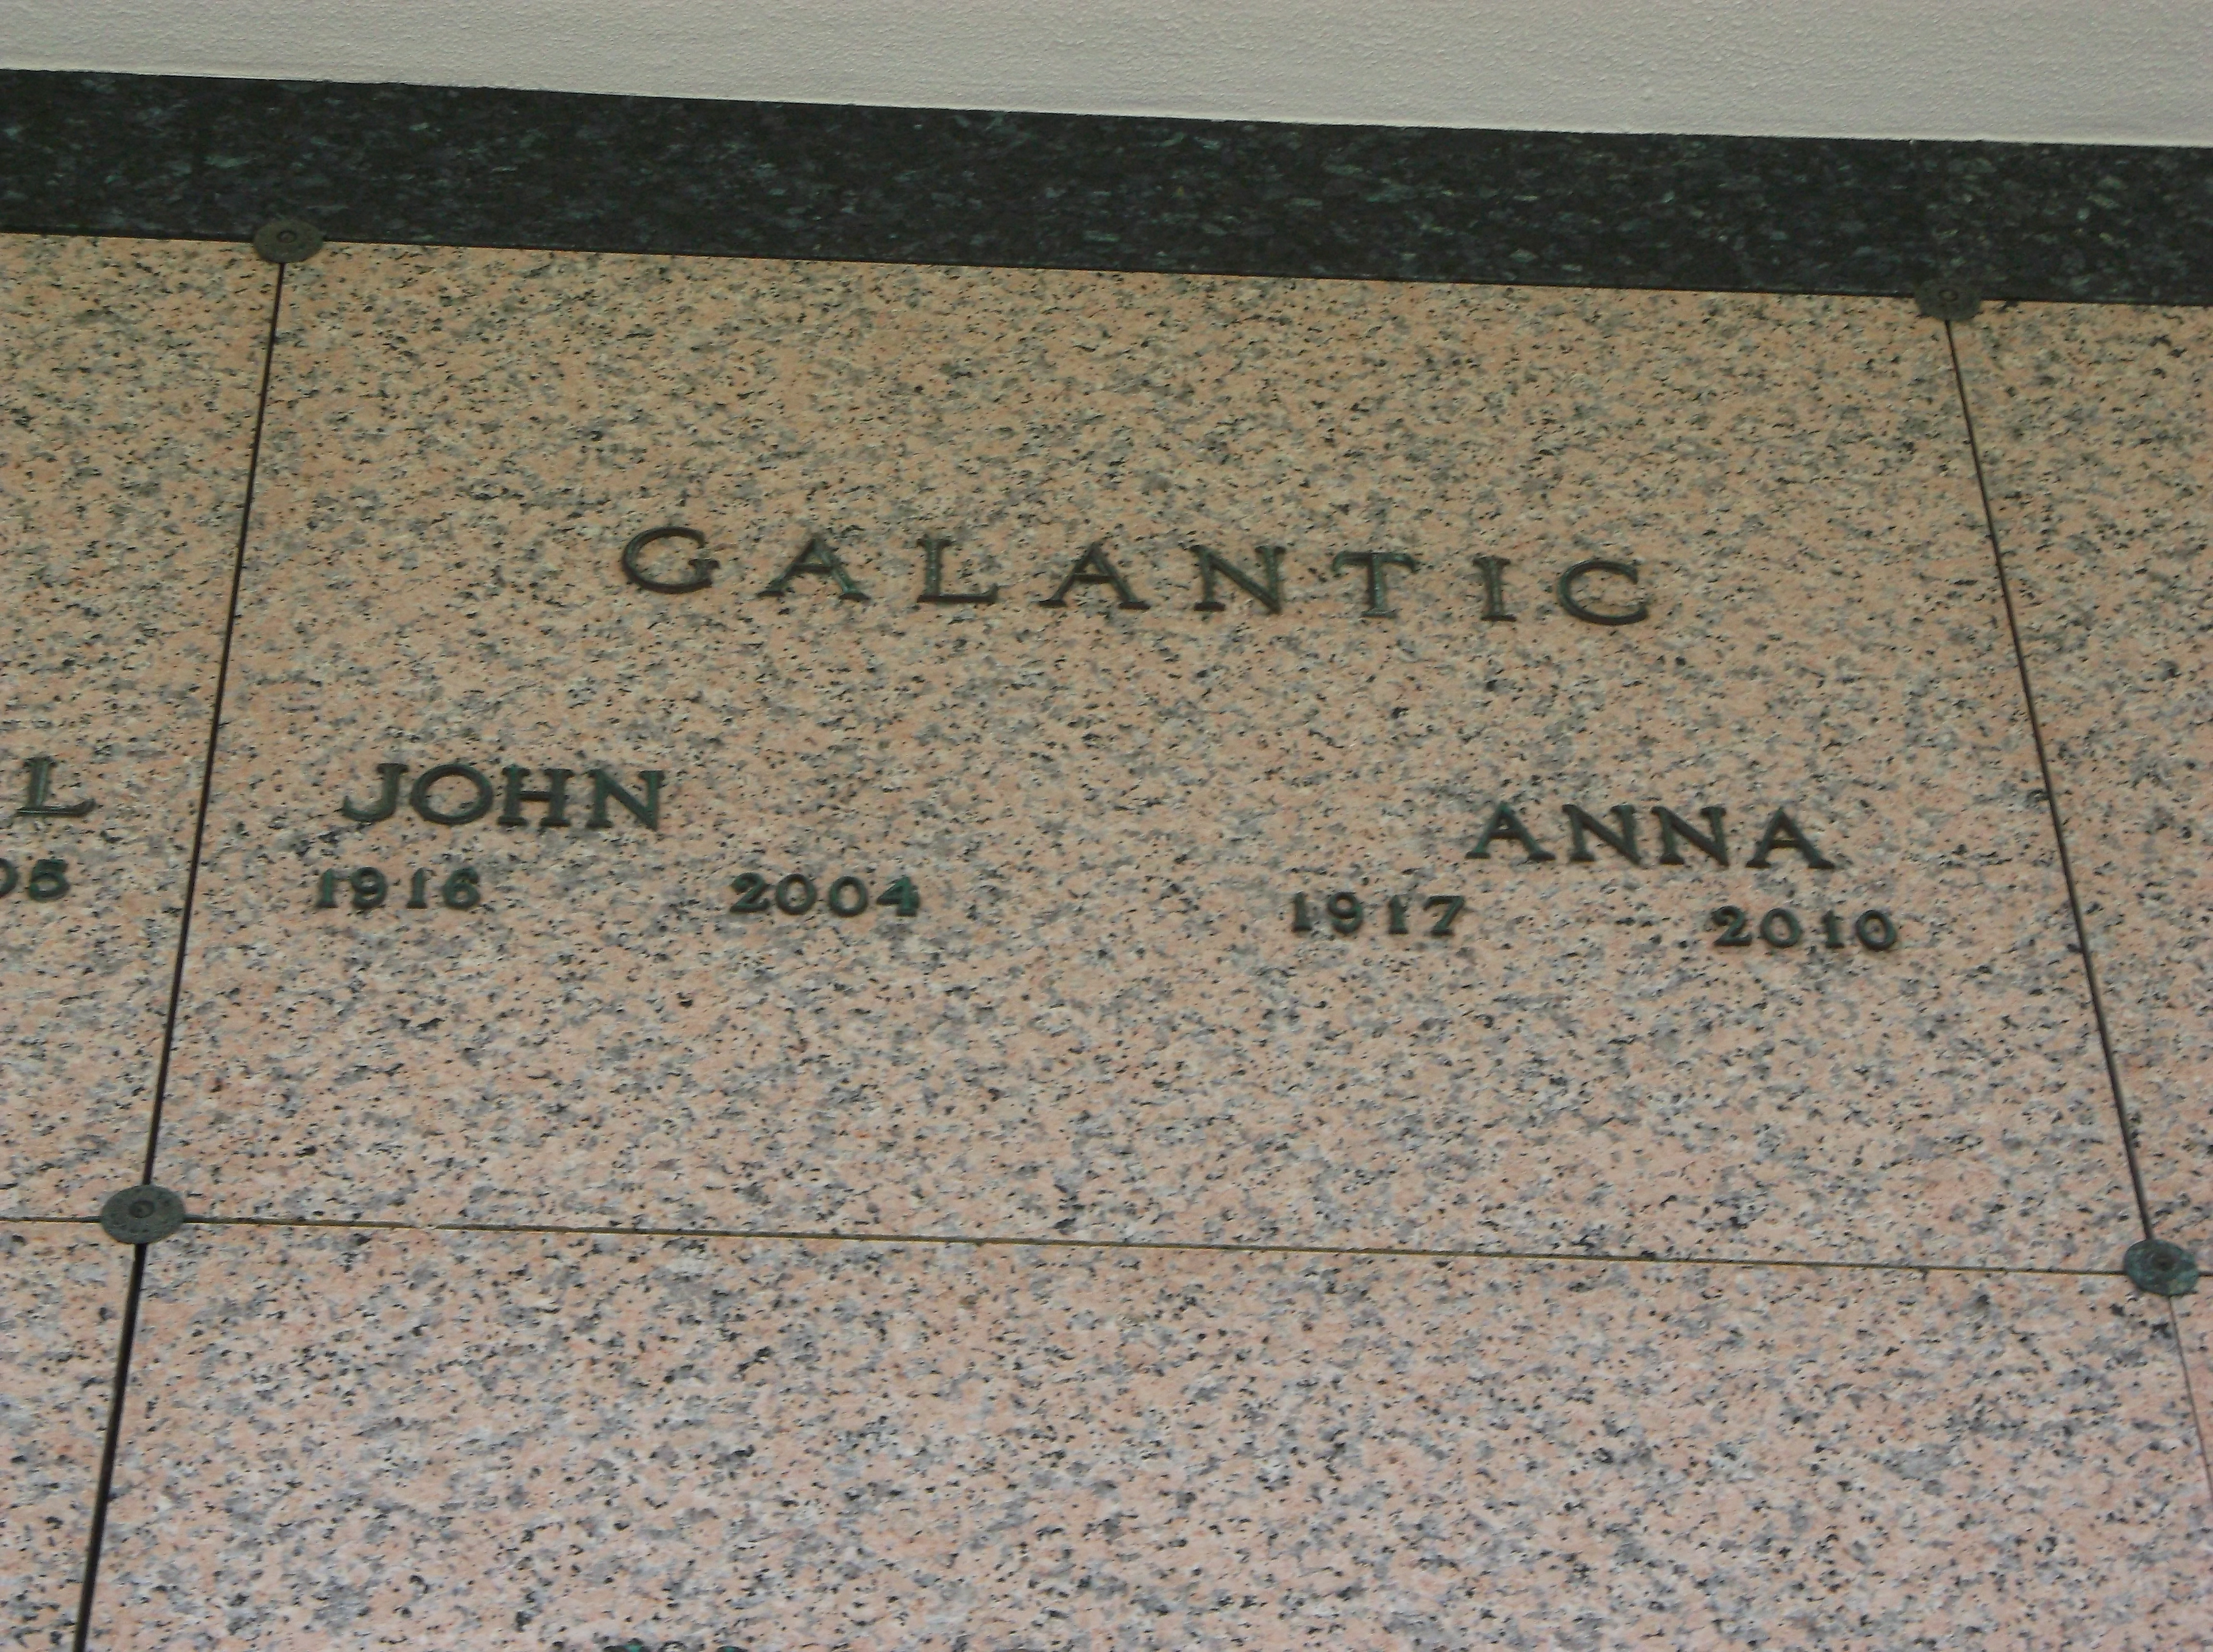 Anna Galantic